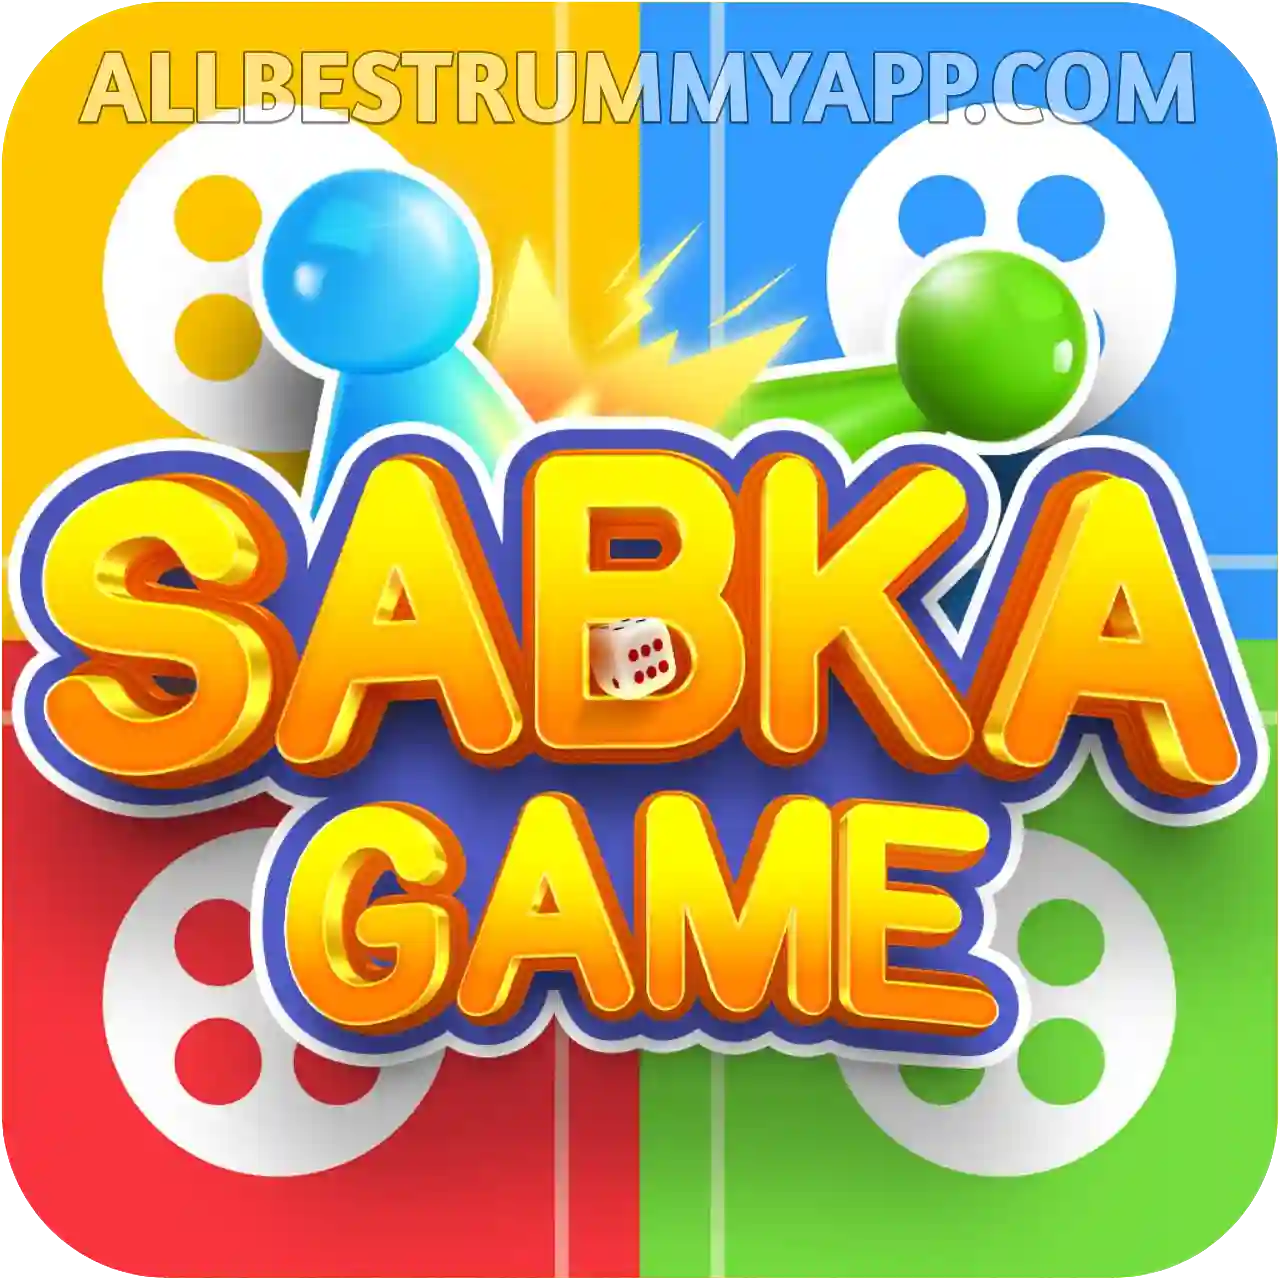 Sabka Game - India Rummy APk